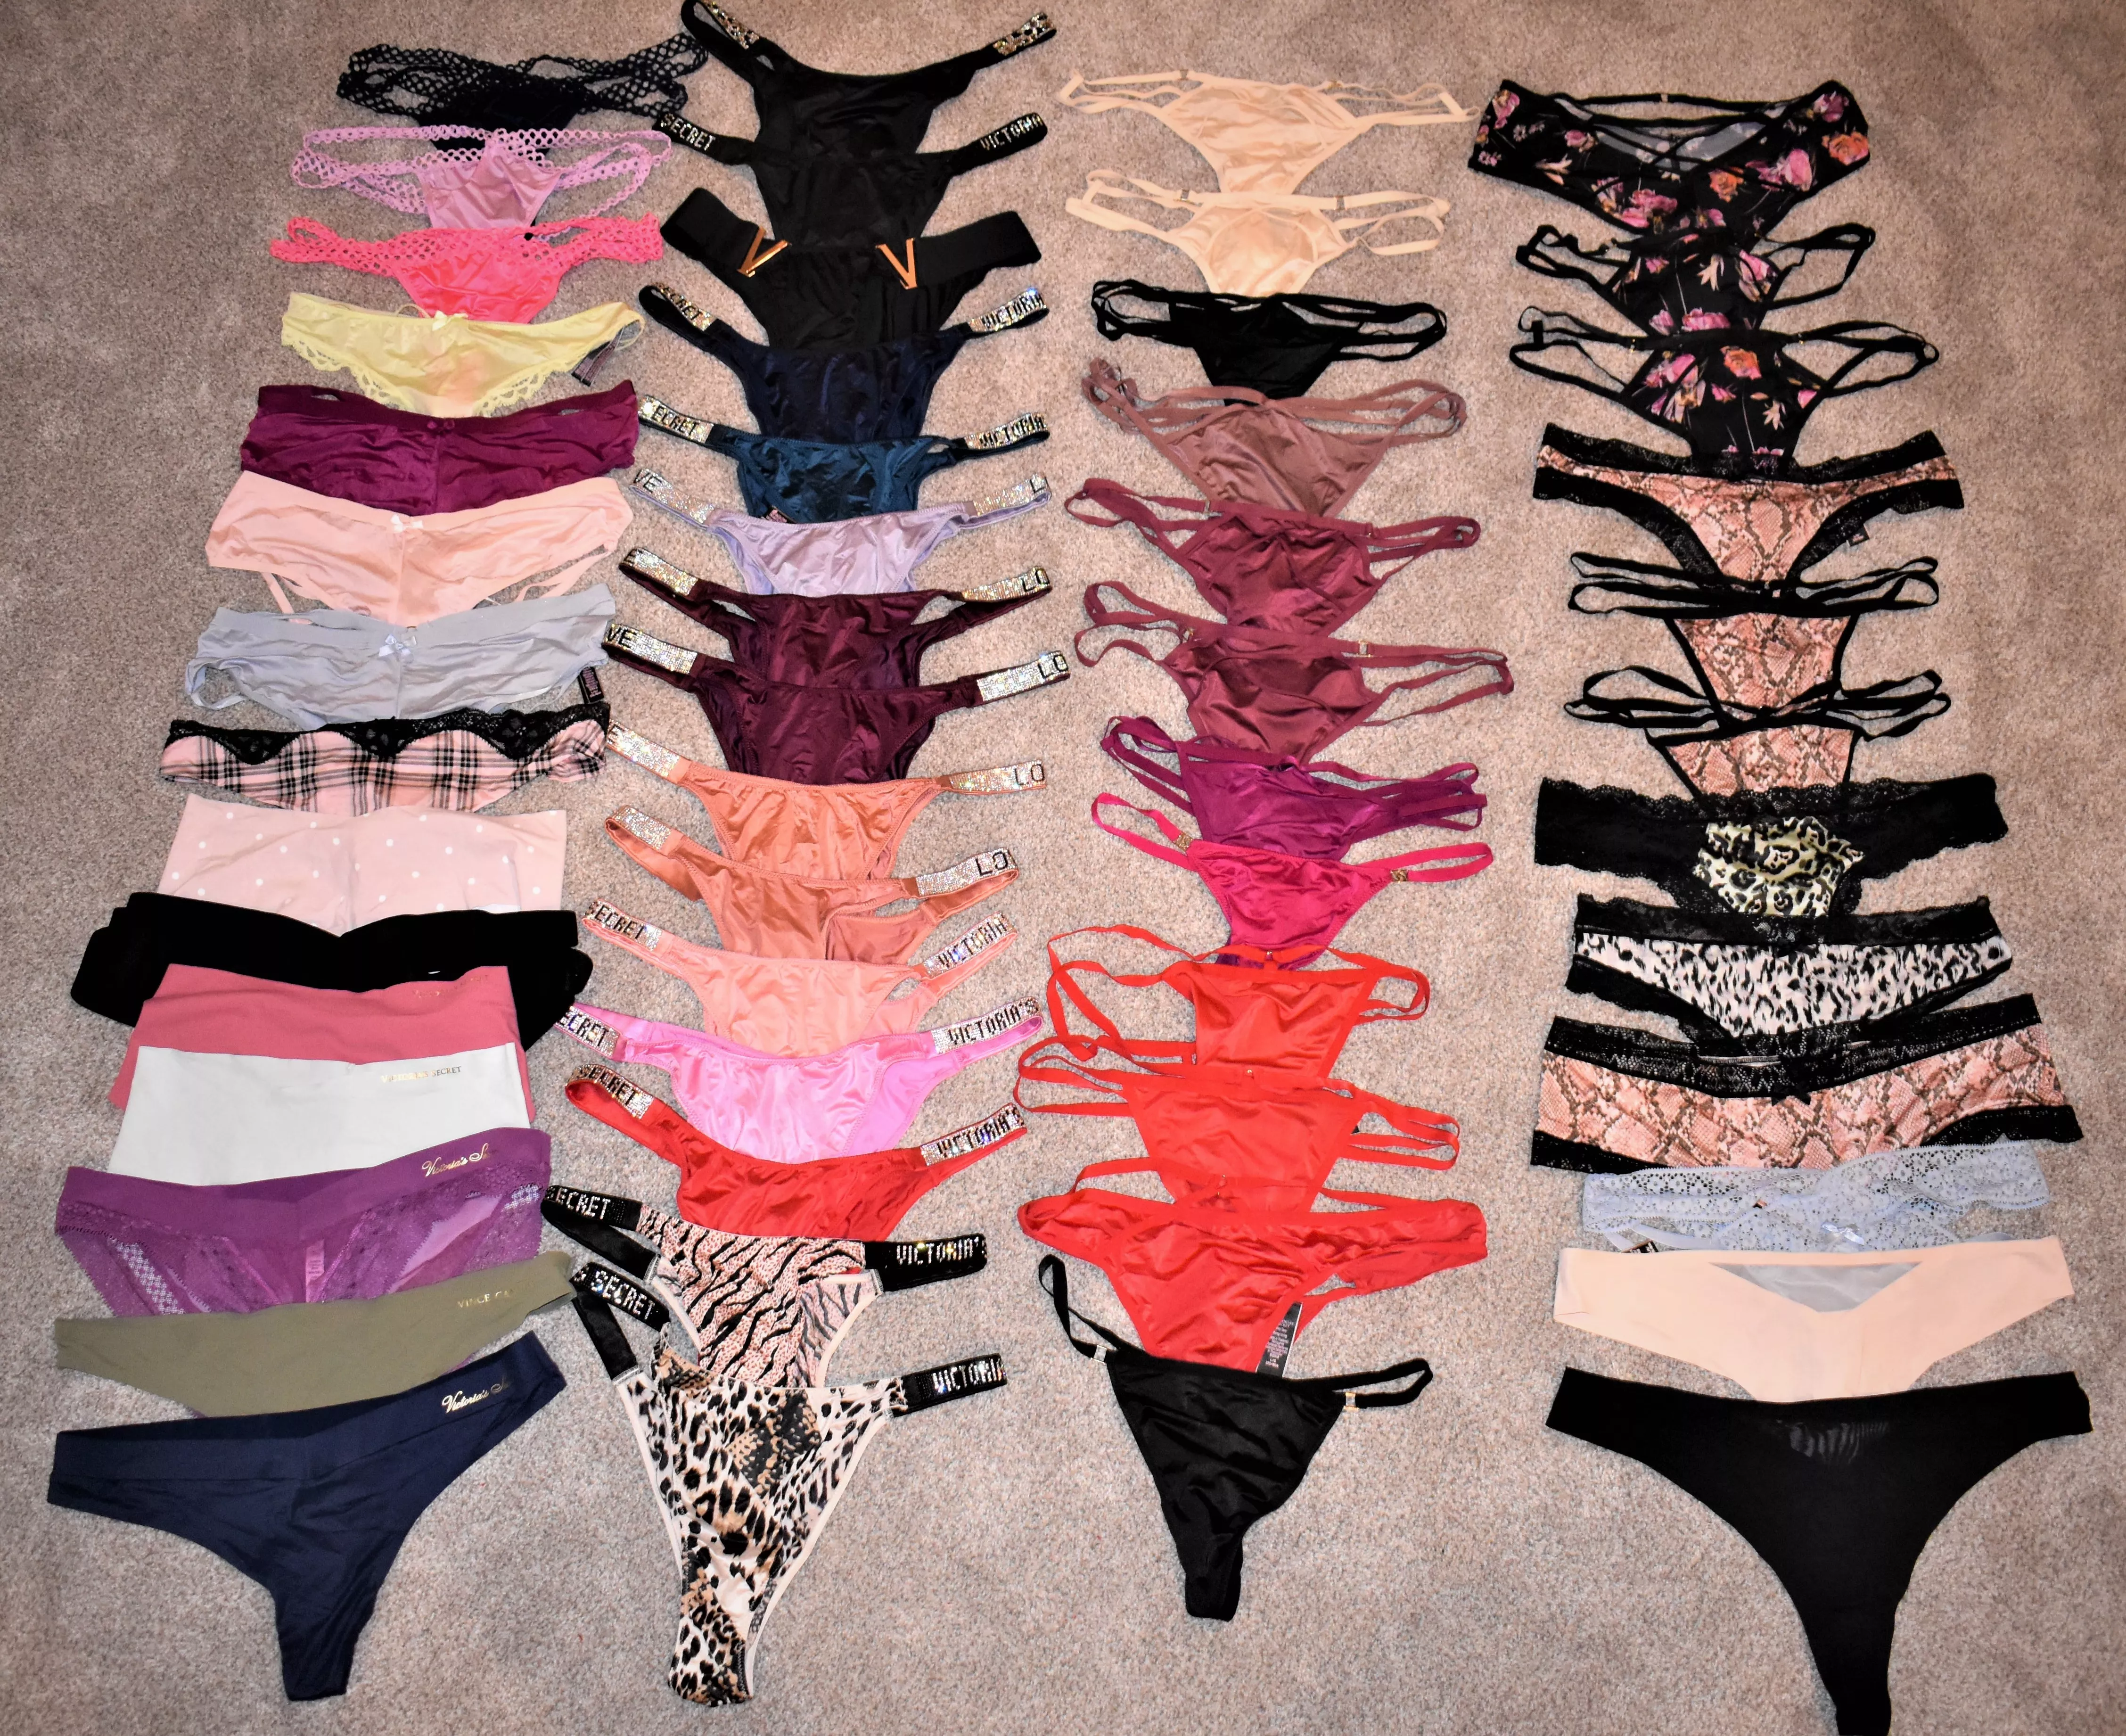 Love VS panties. Do you like my collection? :)